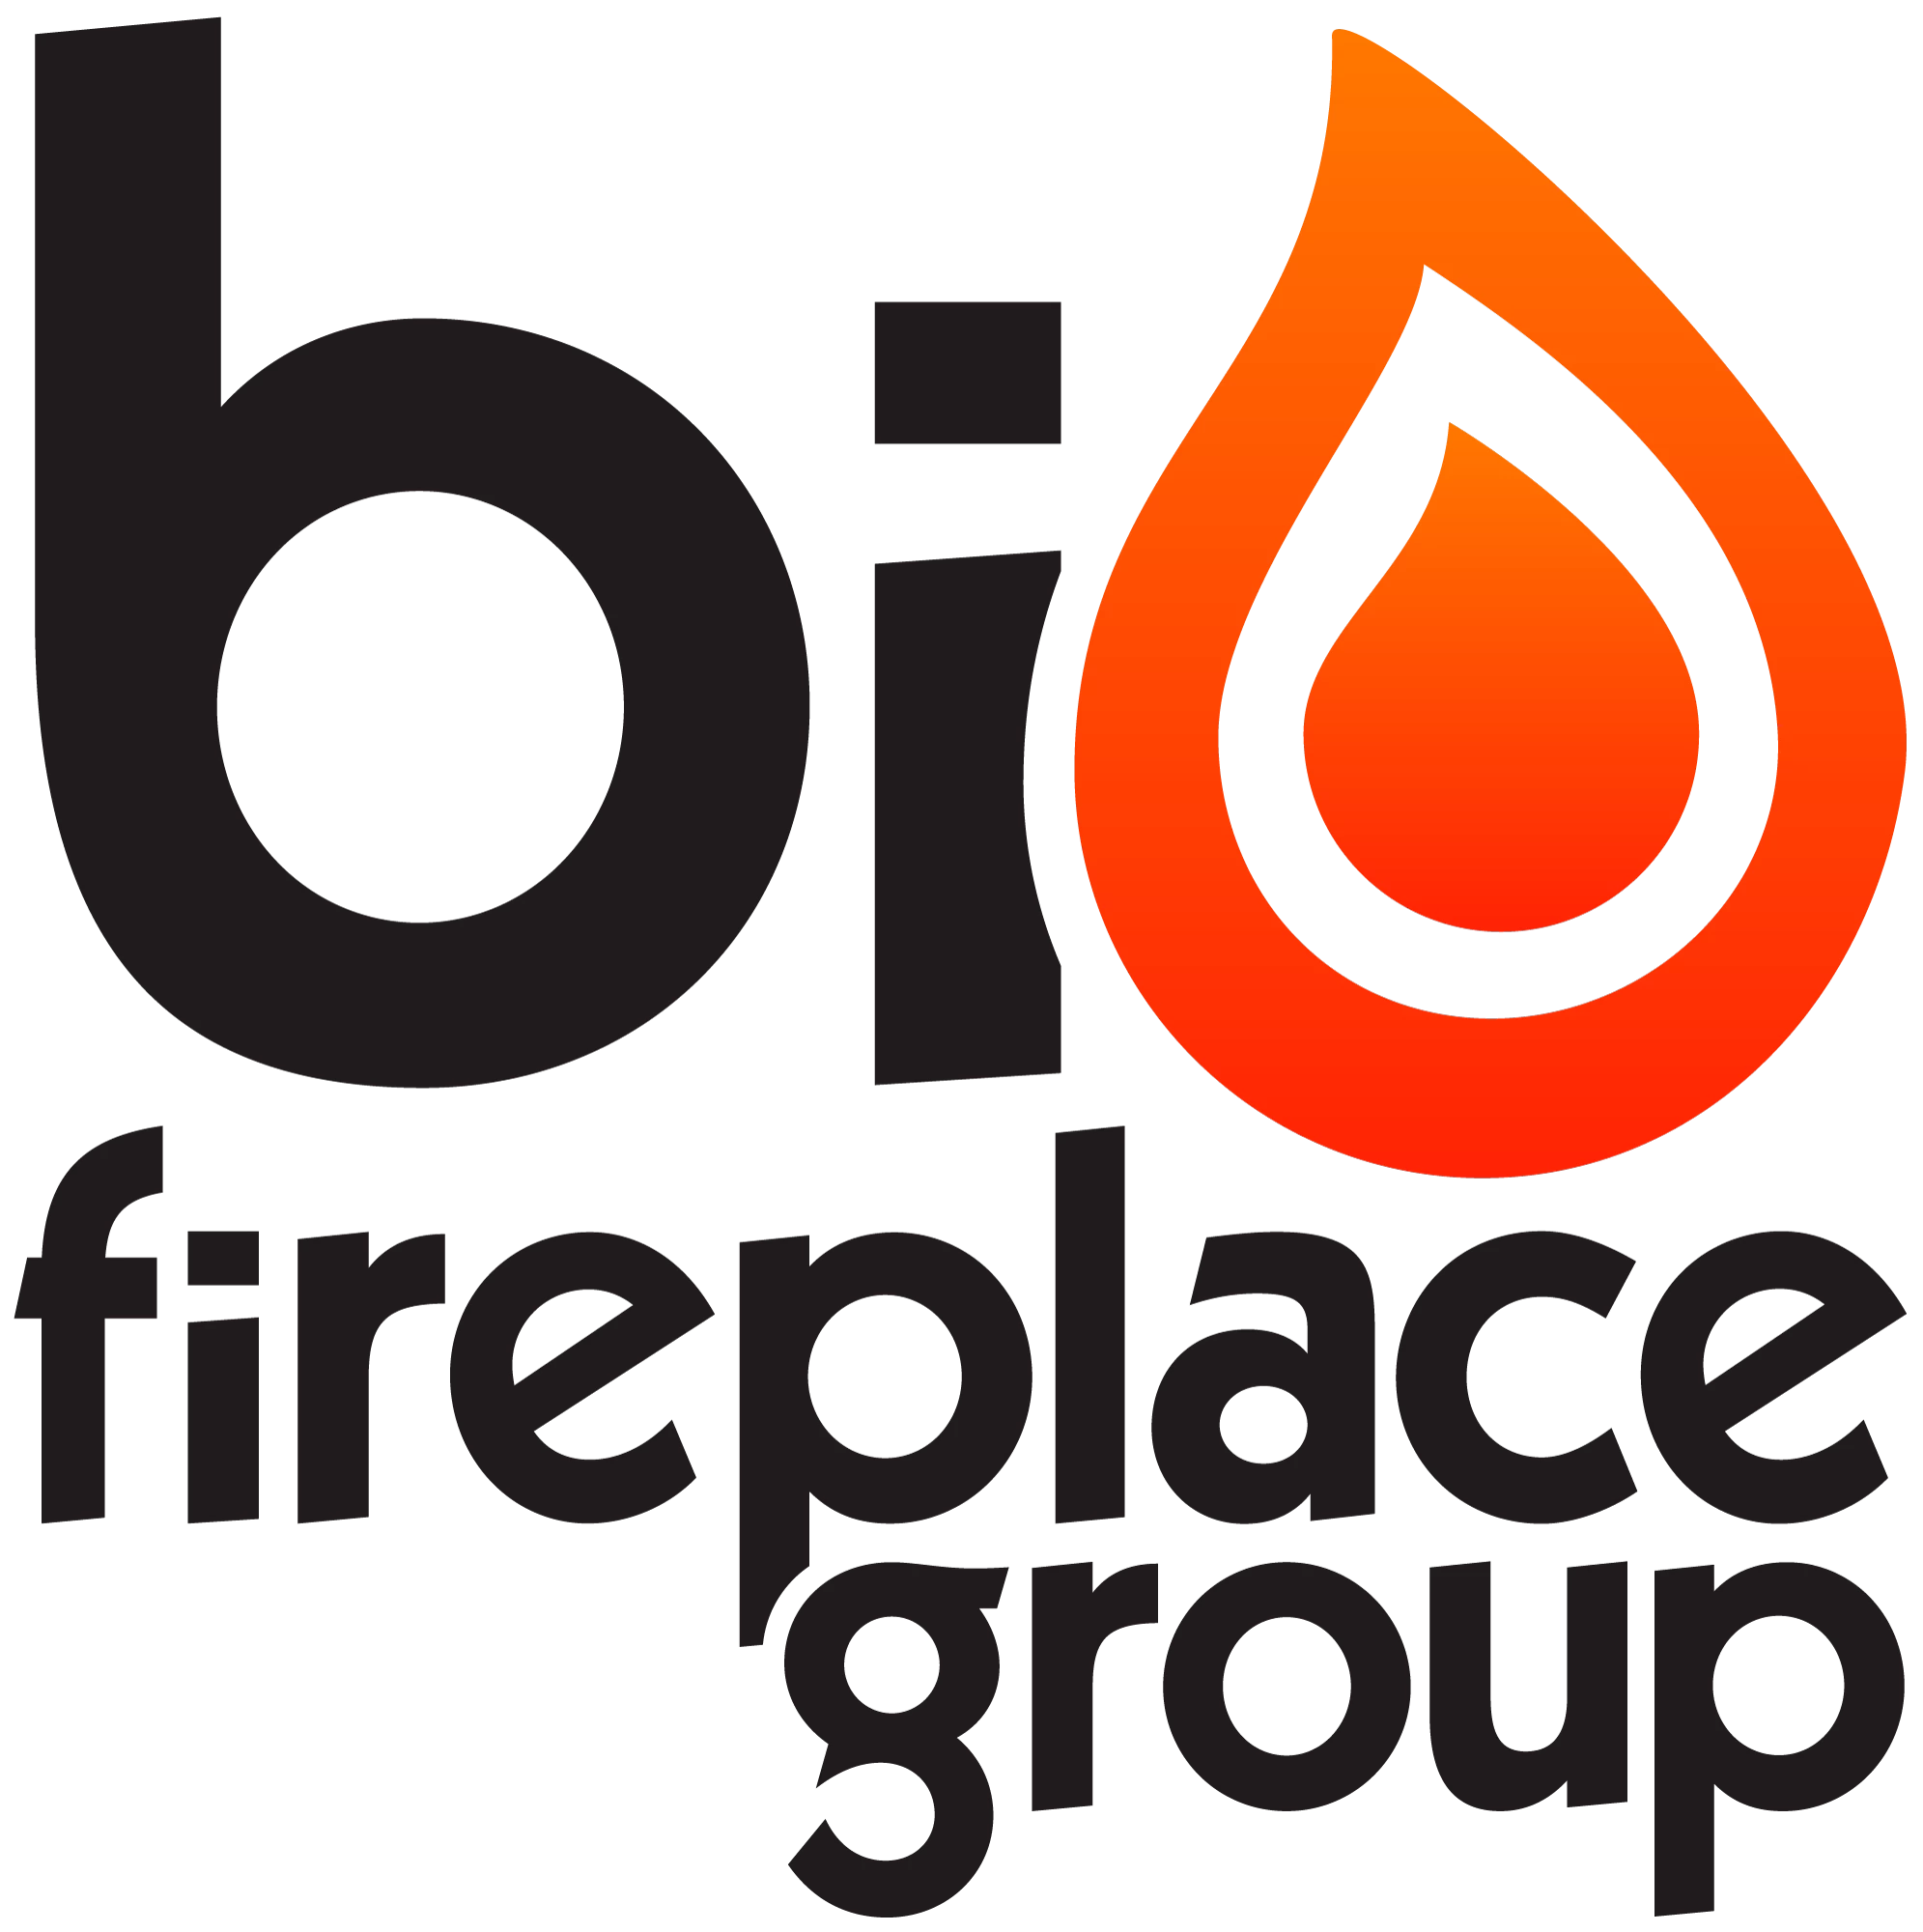 bio fireplace group logo